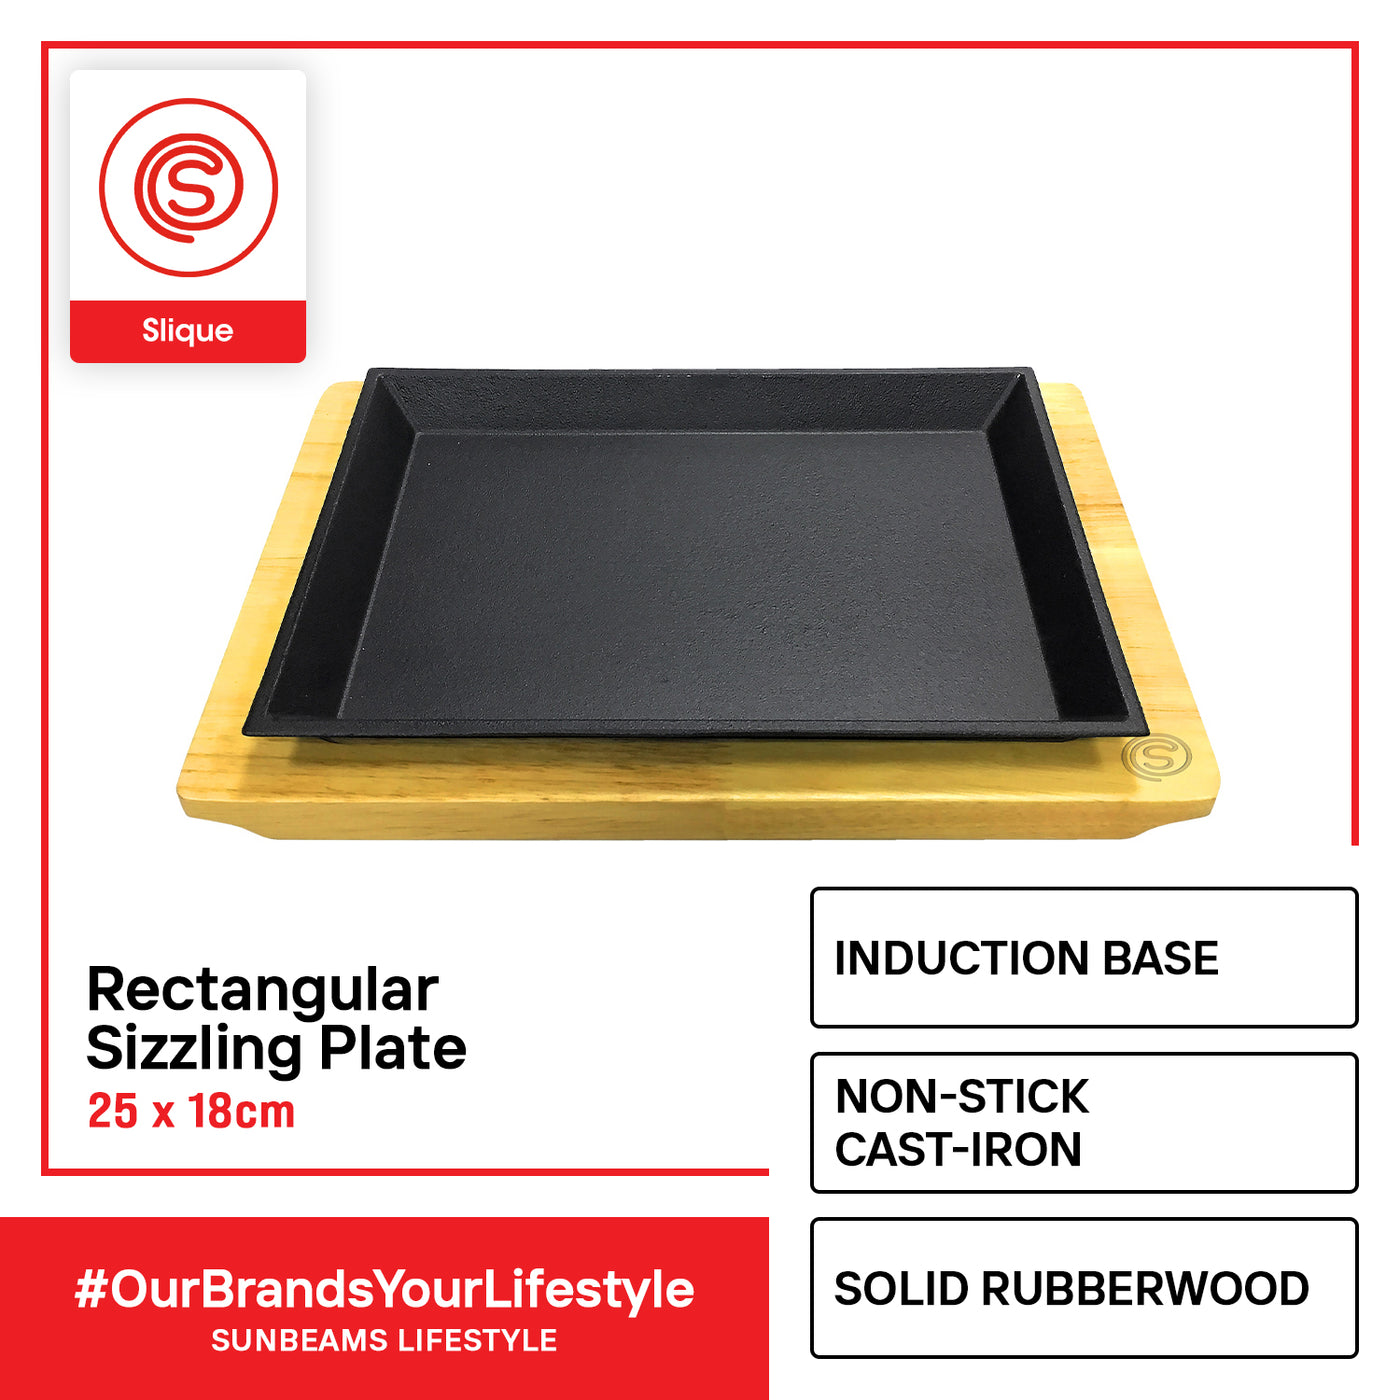 SLIQUE Premium Cast Iron Rectangular Sizzling Plates w/ Original Rubber Wood Base 25cm Amazing Gift Idea For Any Occasion!